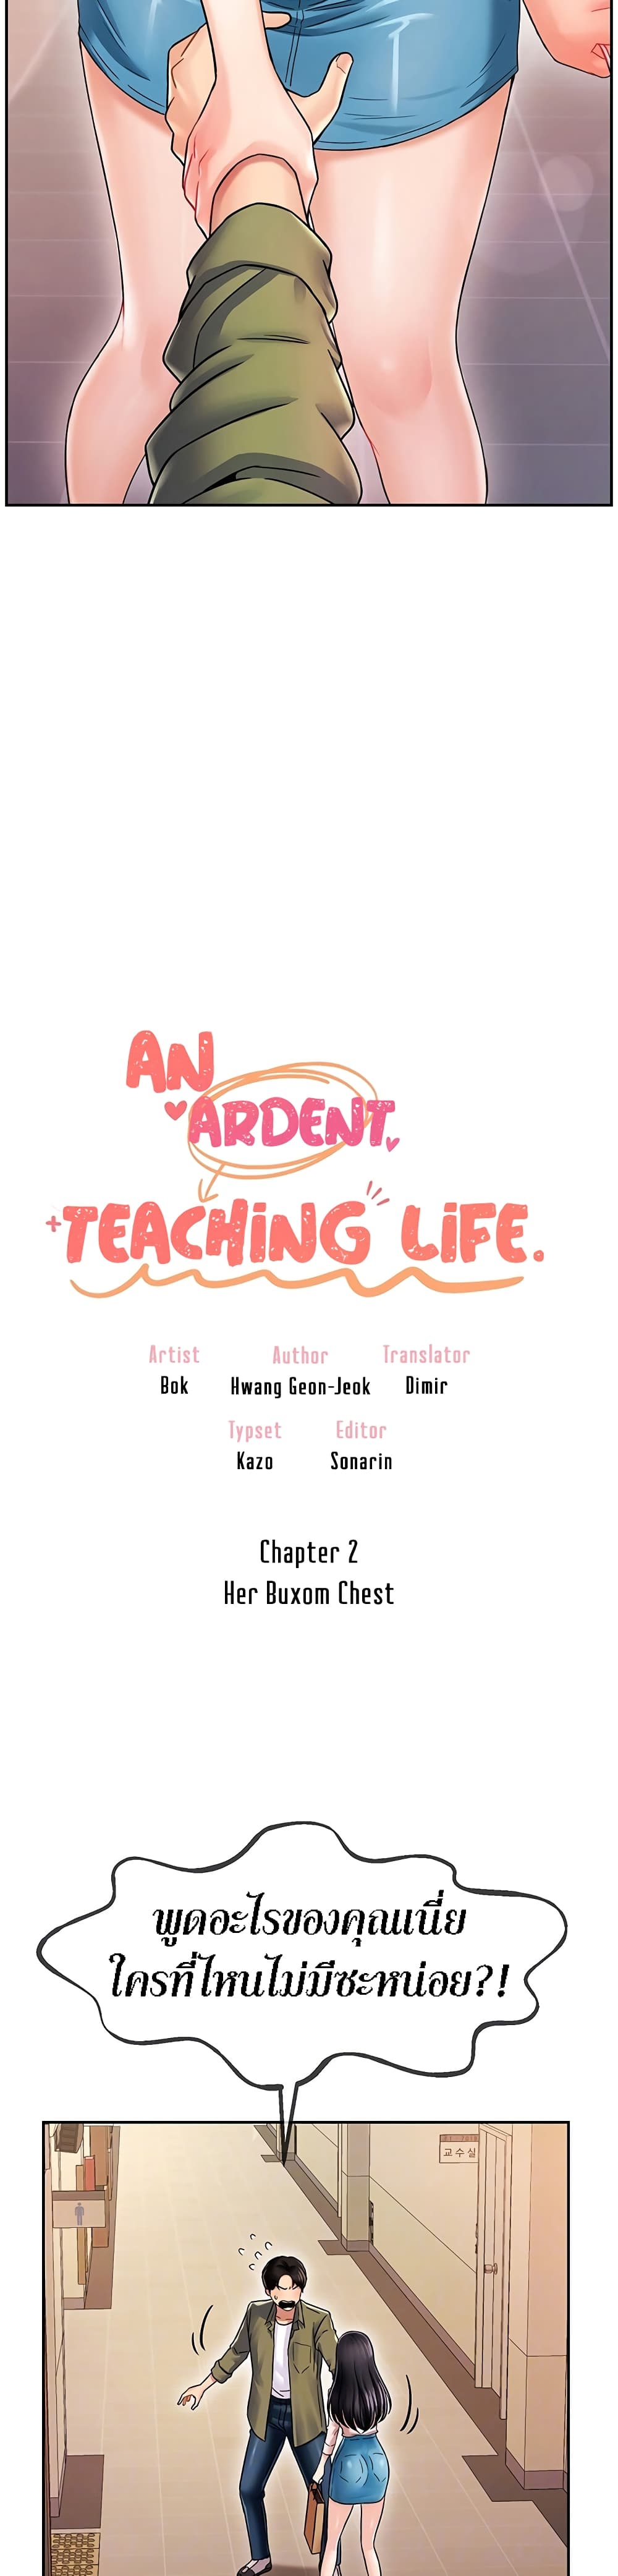 An Ardent Teaching Life 2-2